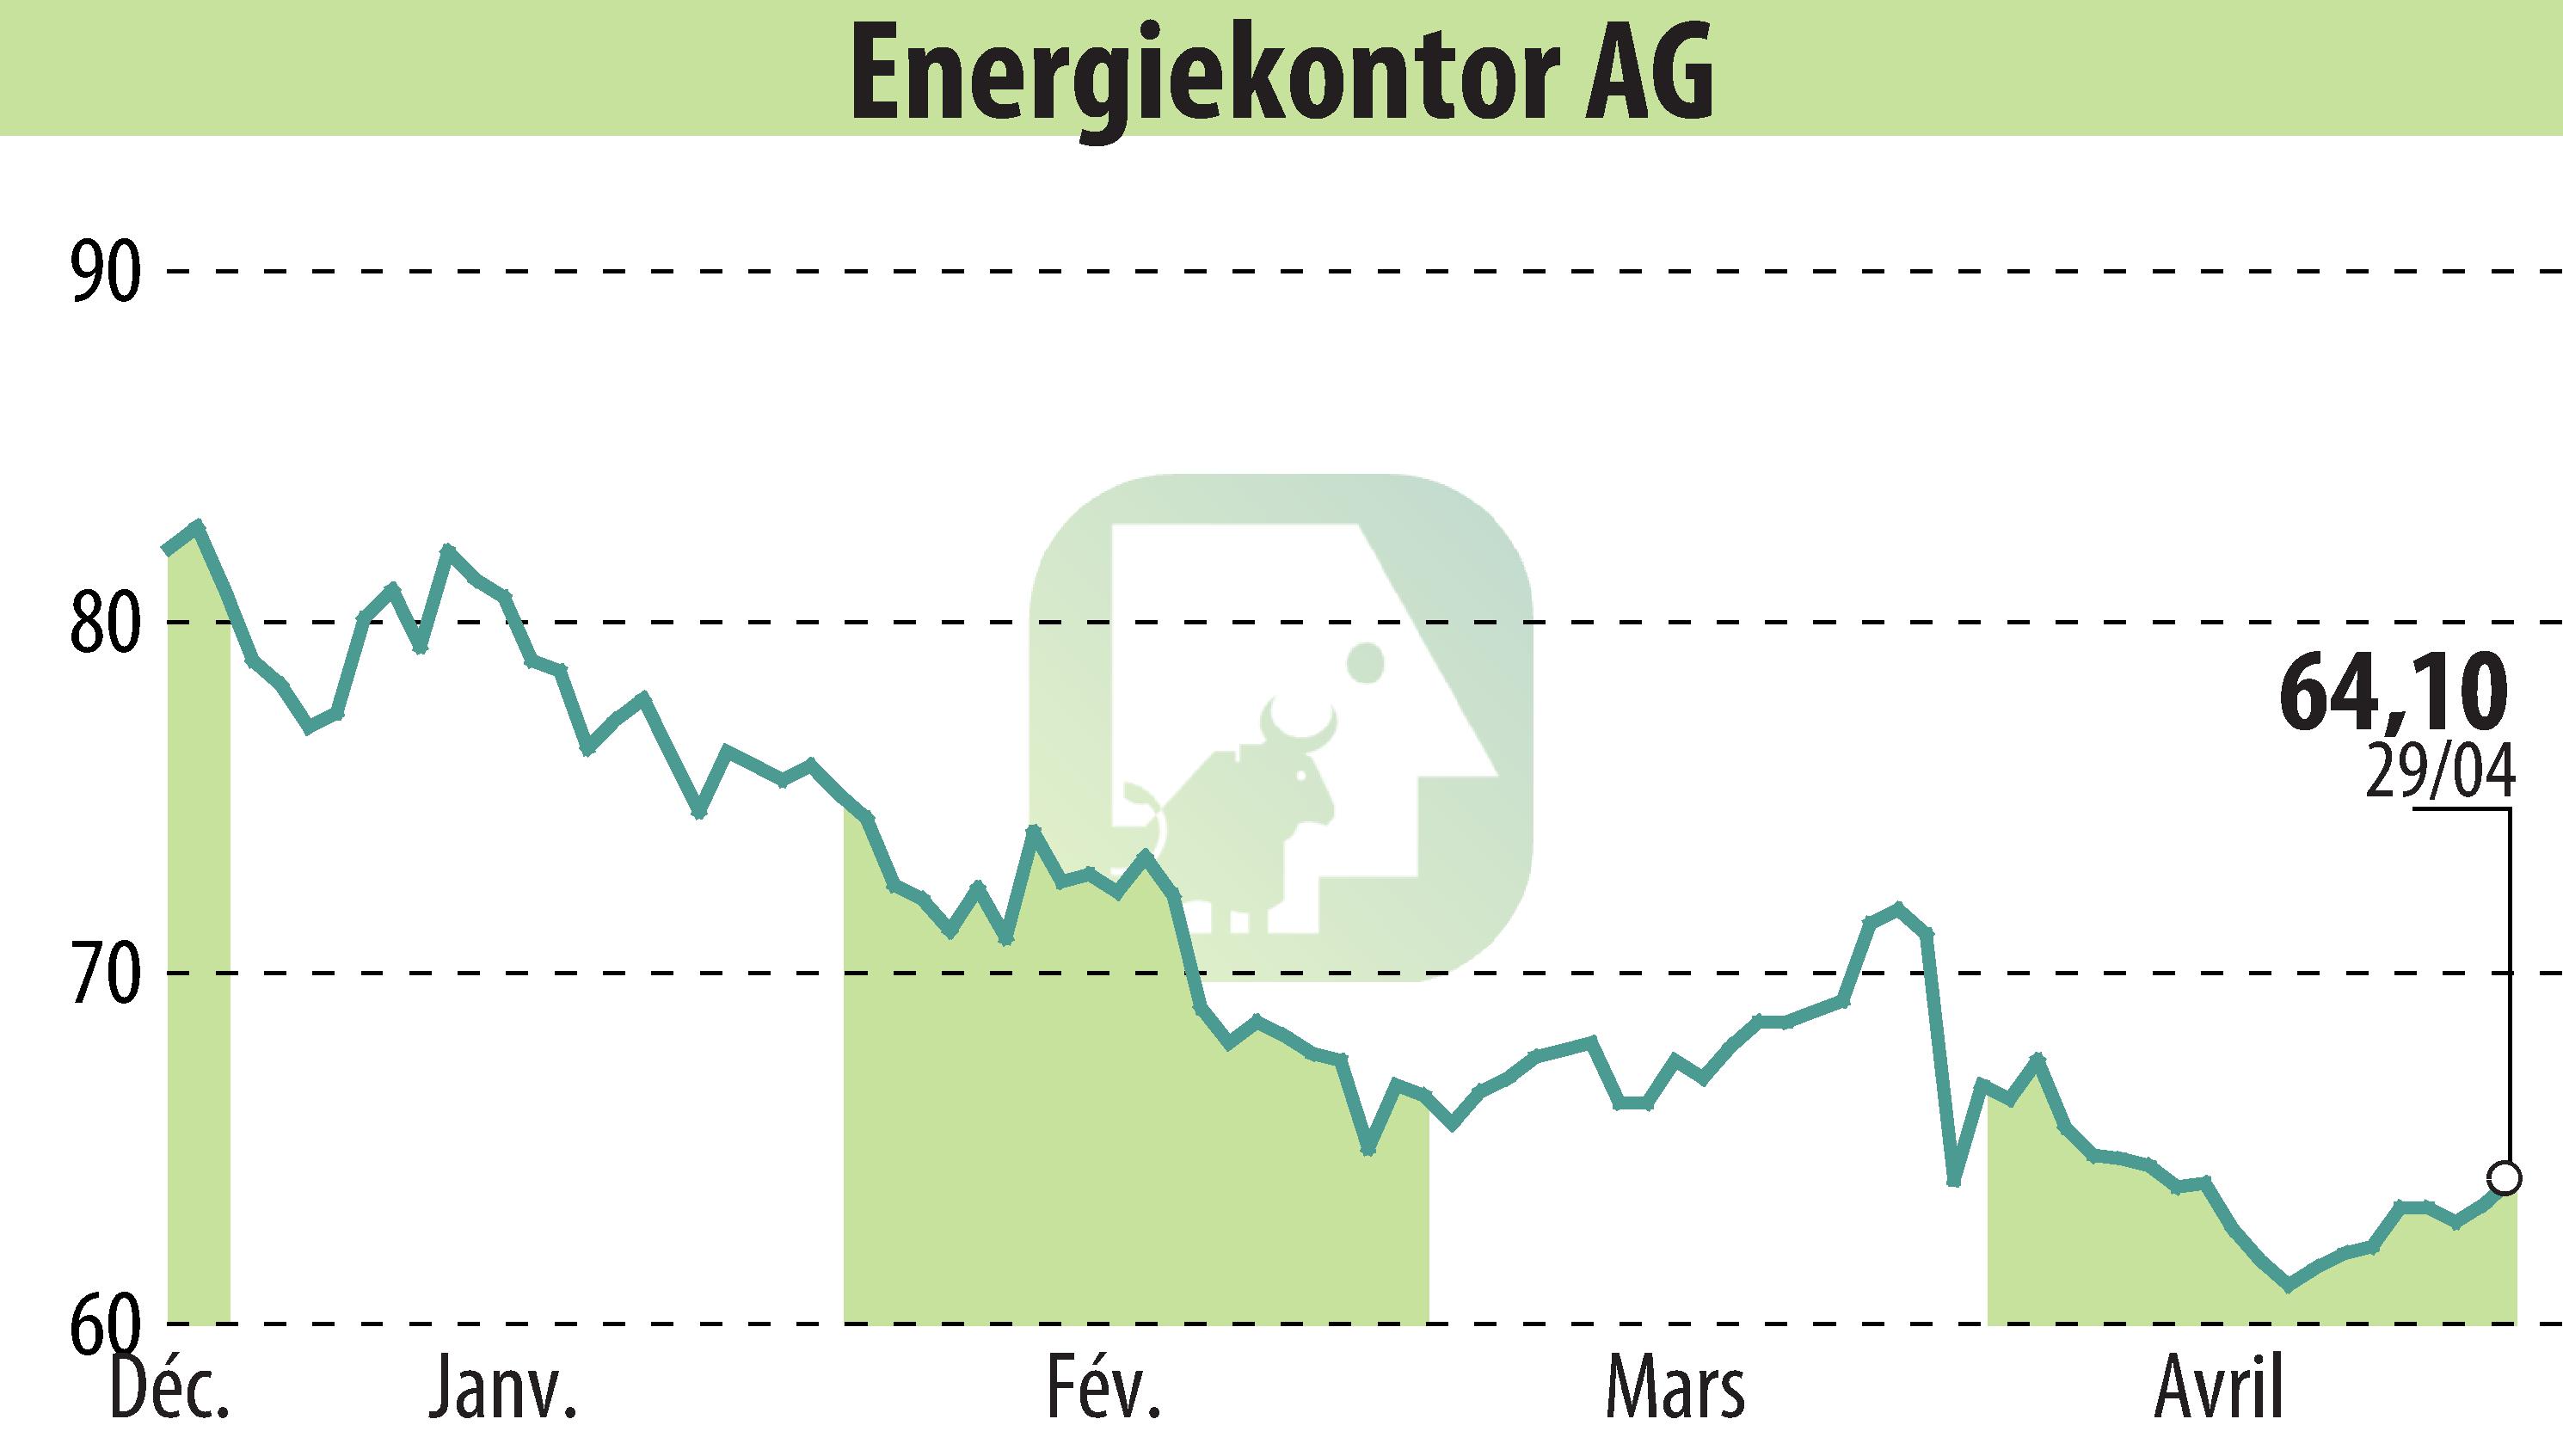 Stock price chart of Energiekontor AG (EBR:EKT) showing fluctuations.